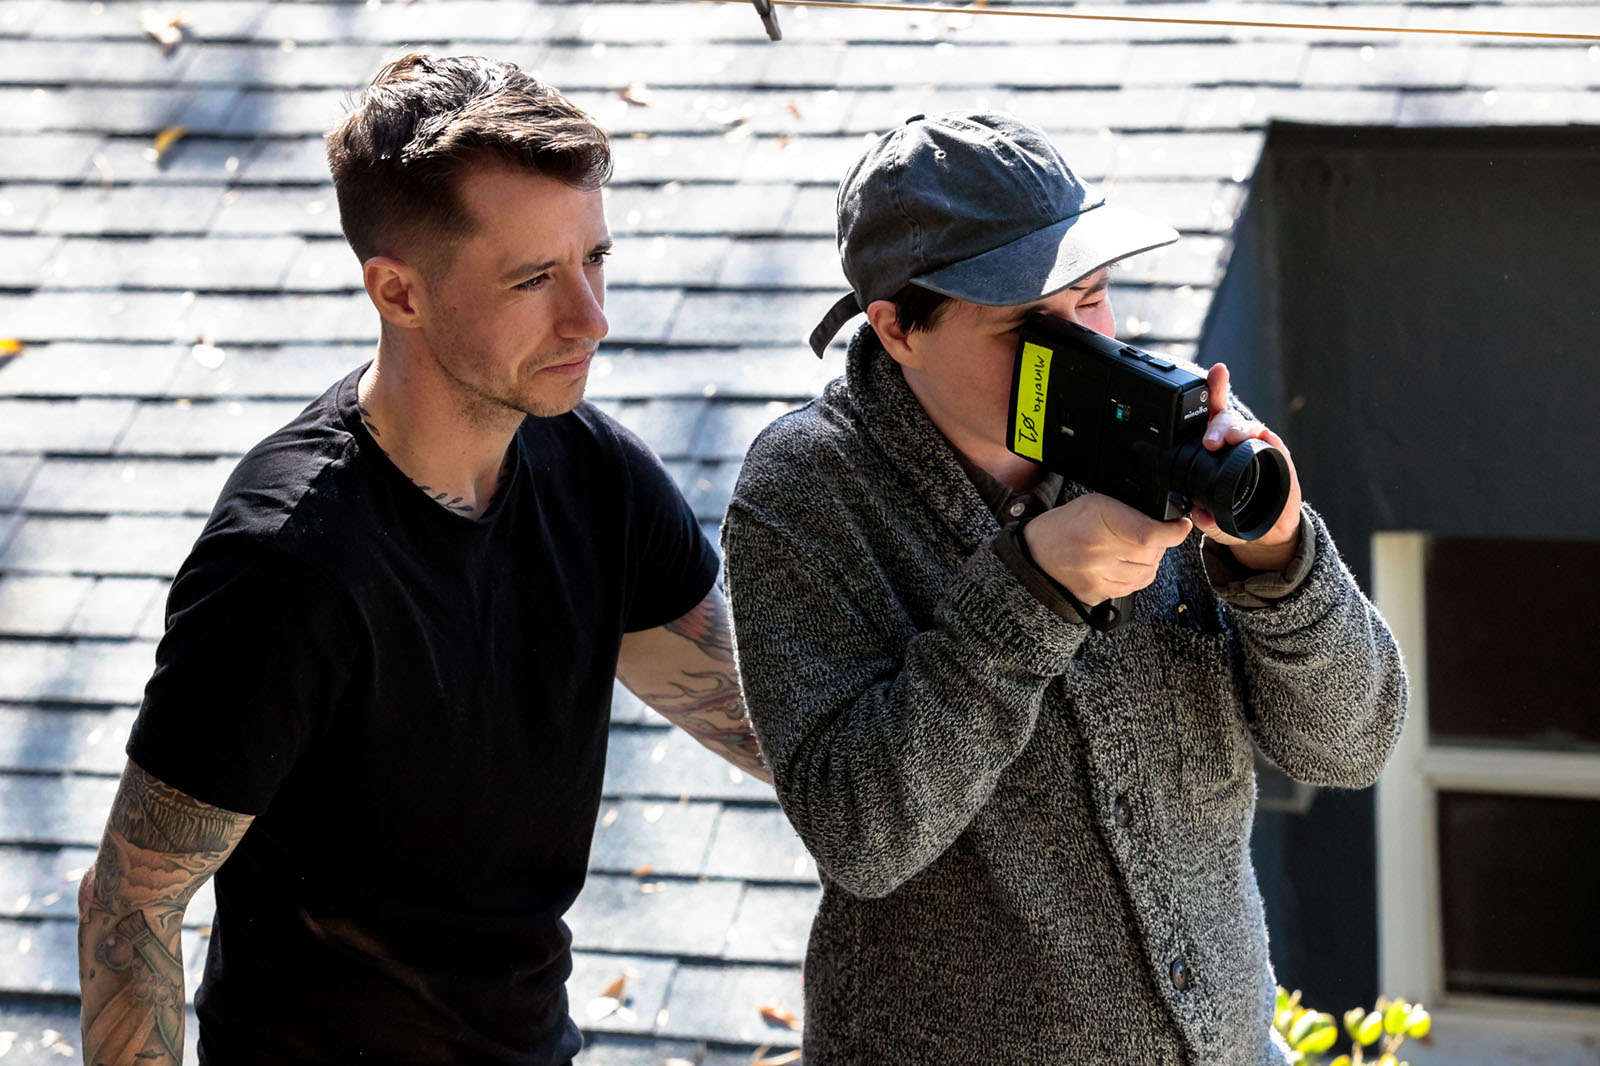 Chase Joynt watches as Aubree Bernier-Clarke shoots with a Minolta FX401 8mm camera.